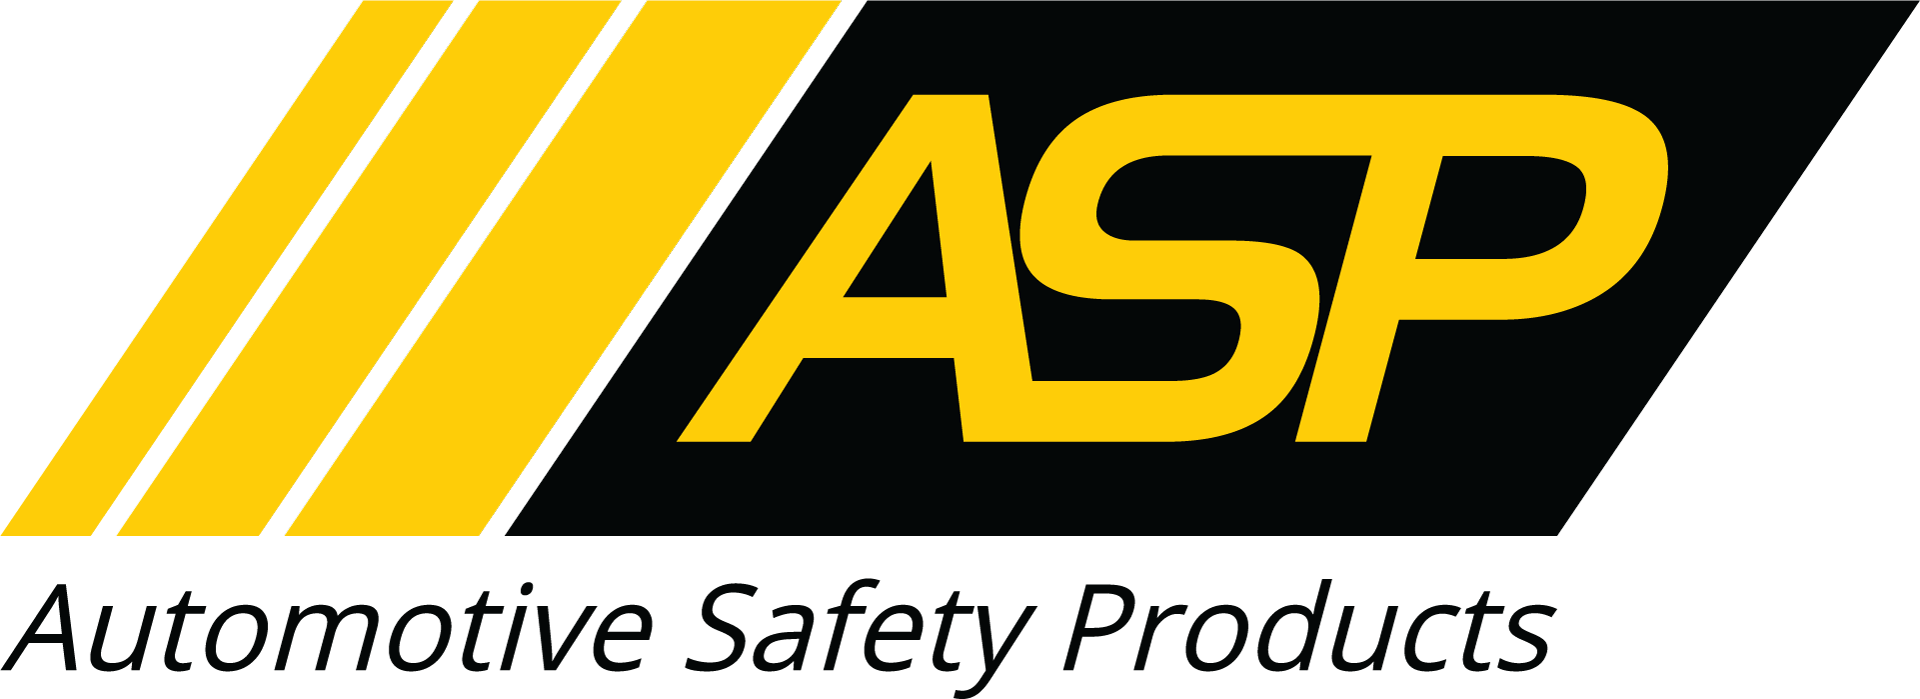 Automotive Products Logo - Automotive Safety Products - Safety With Innovation